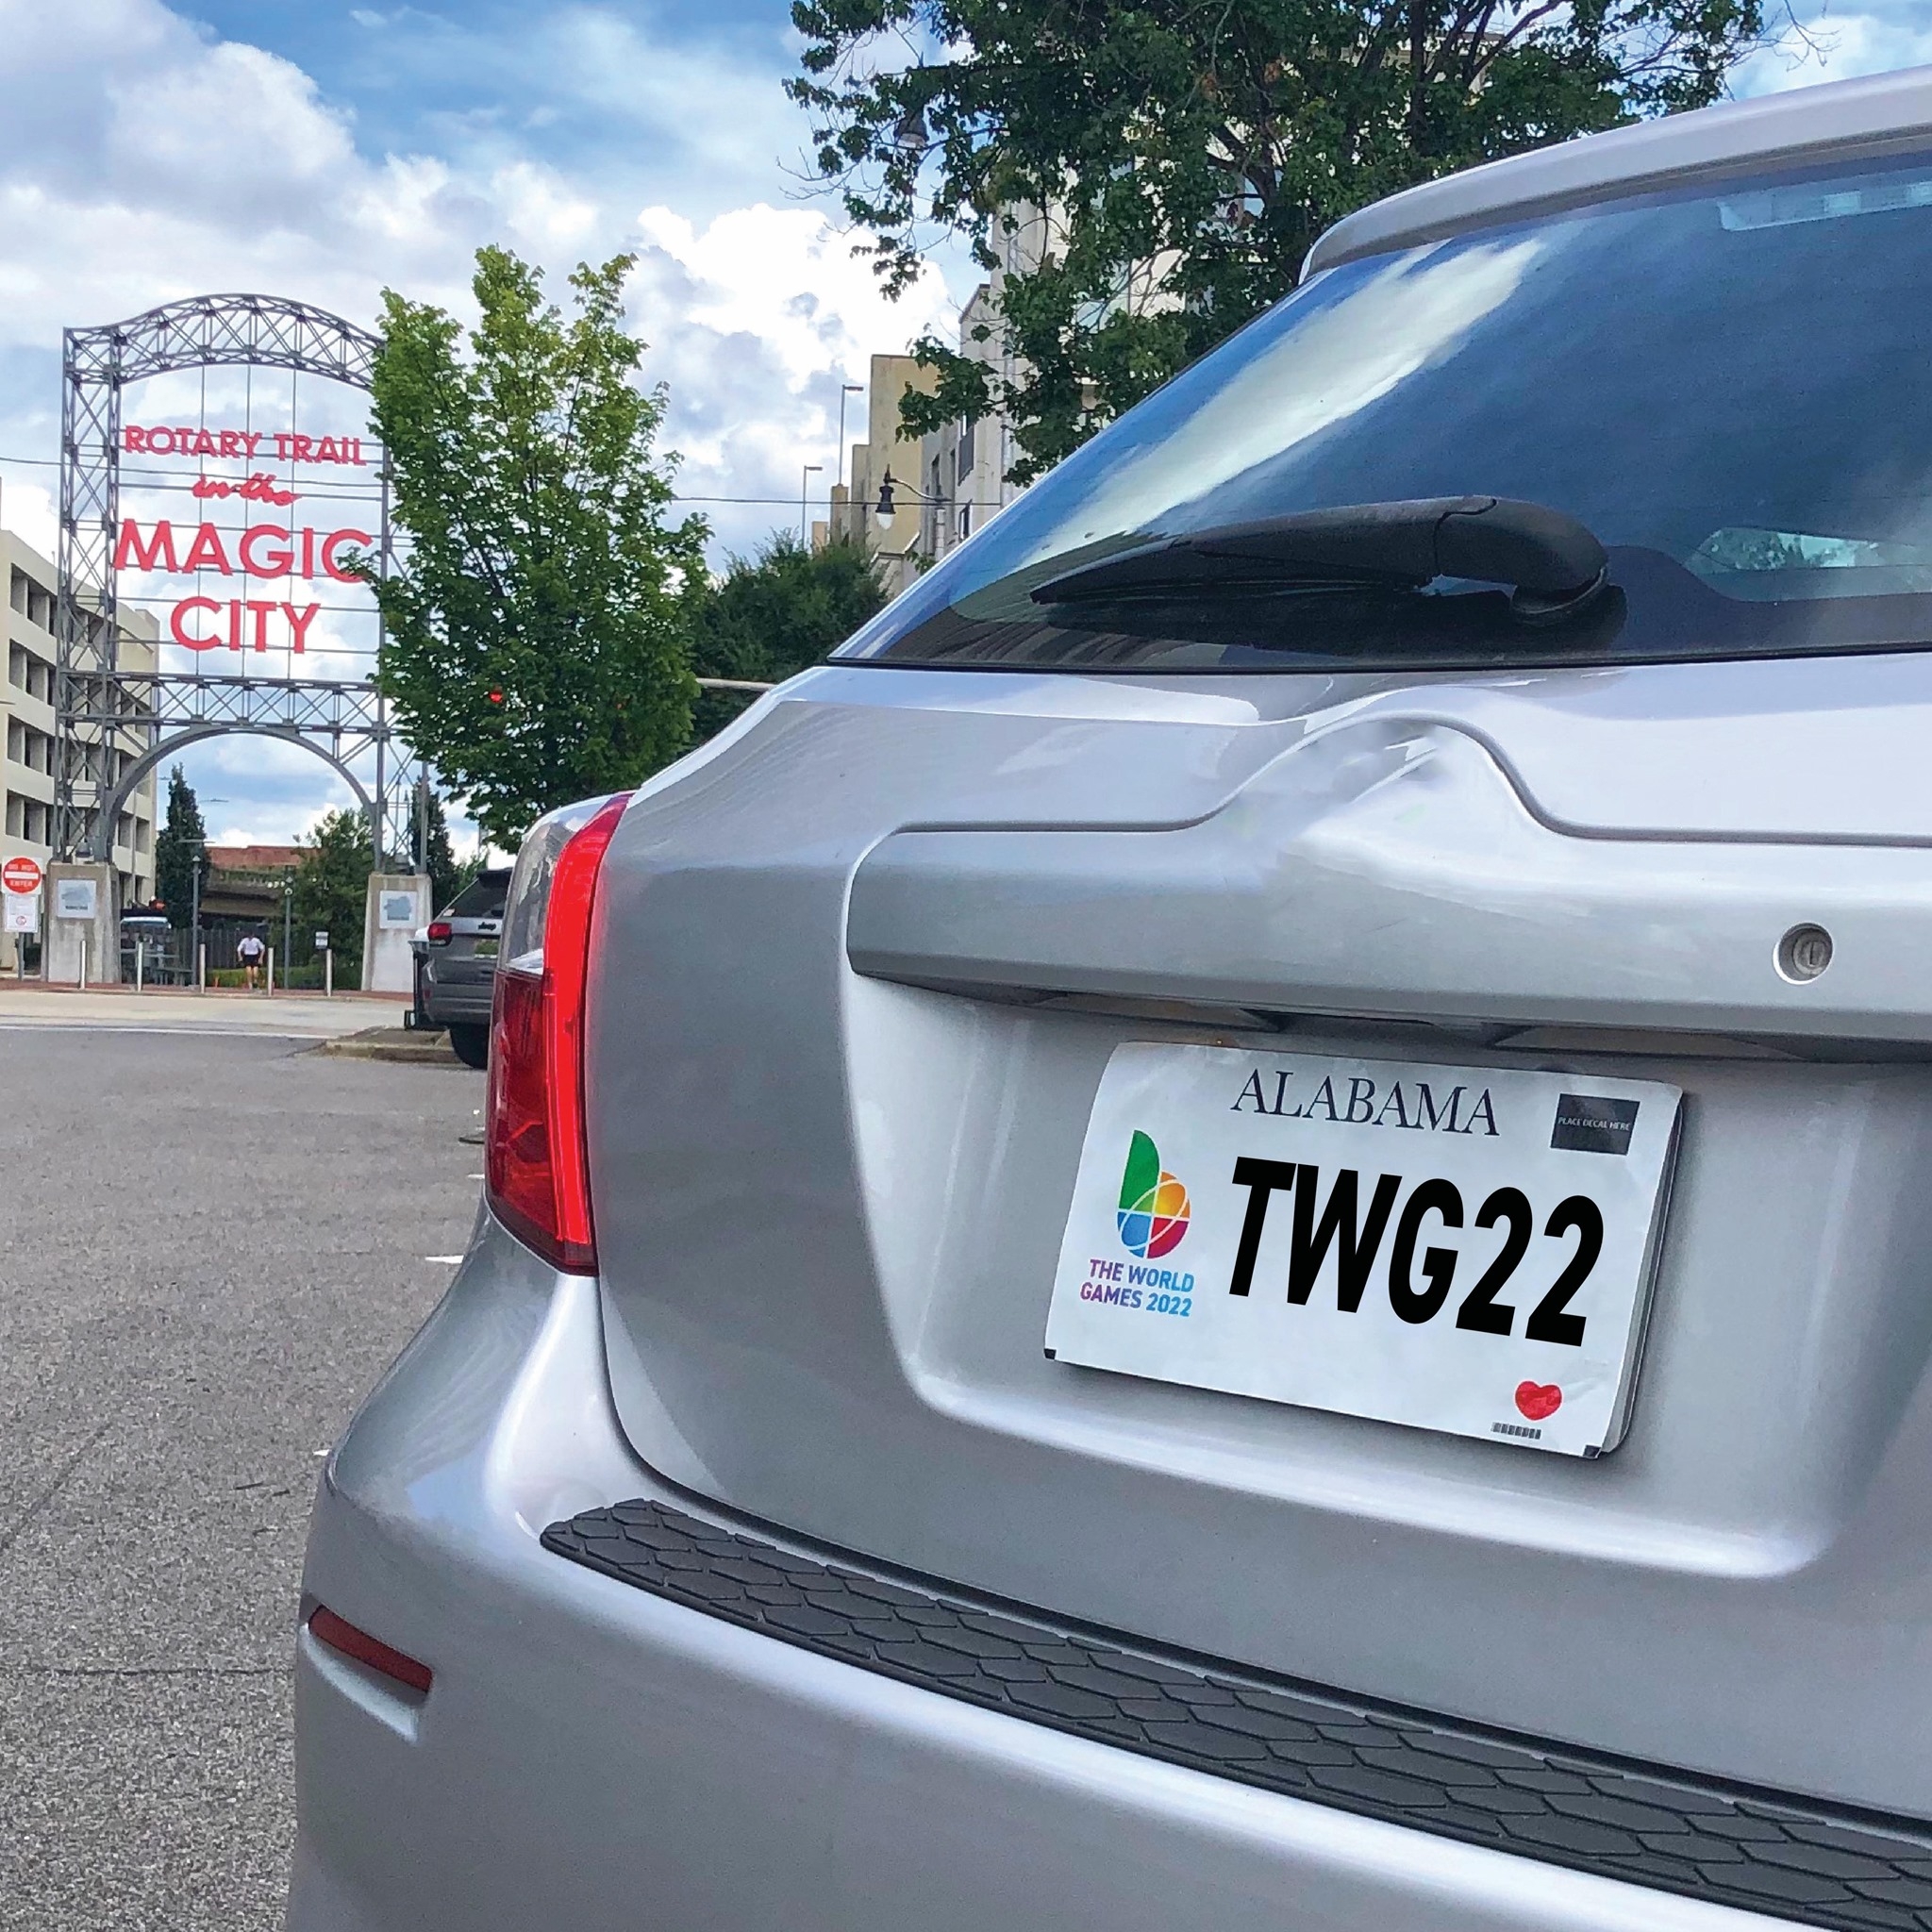 TWG 2 7 specialty license plates making Birmingham better